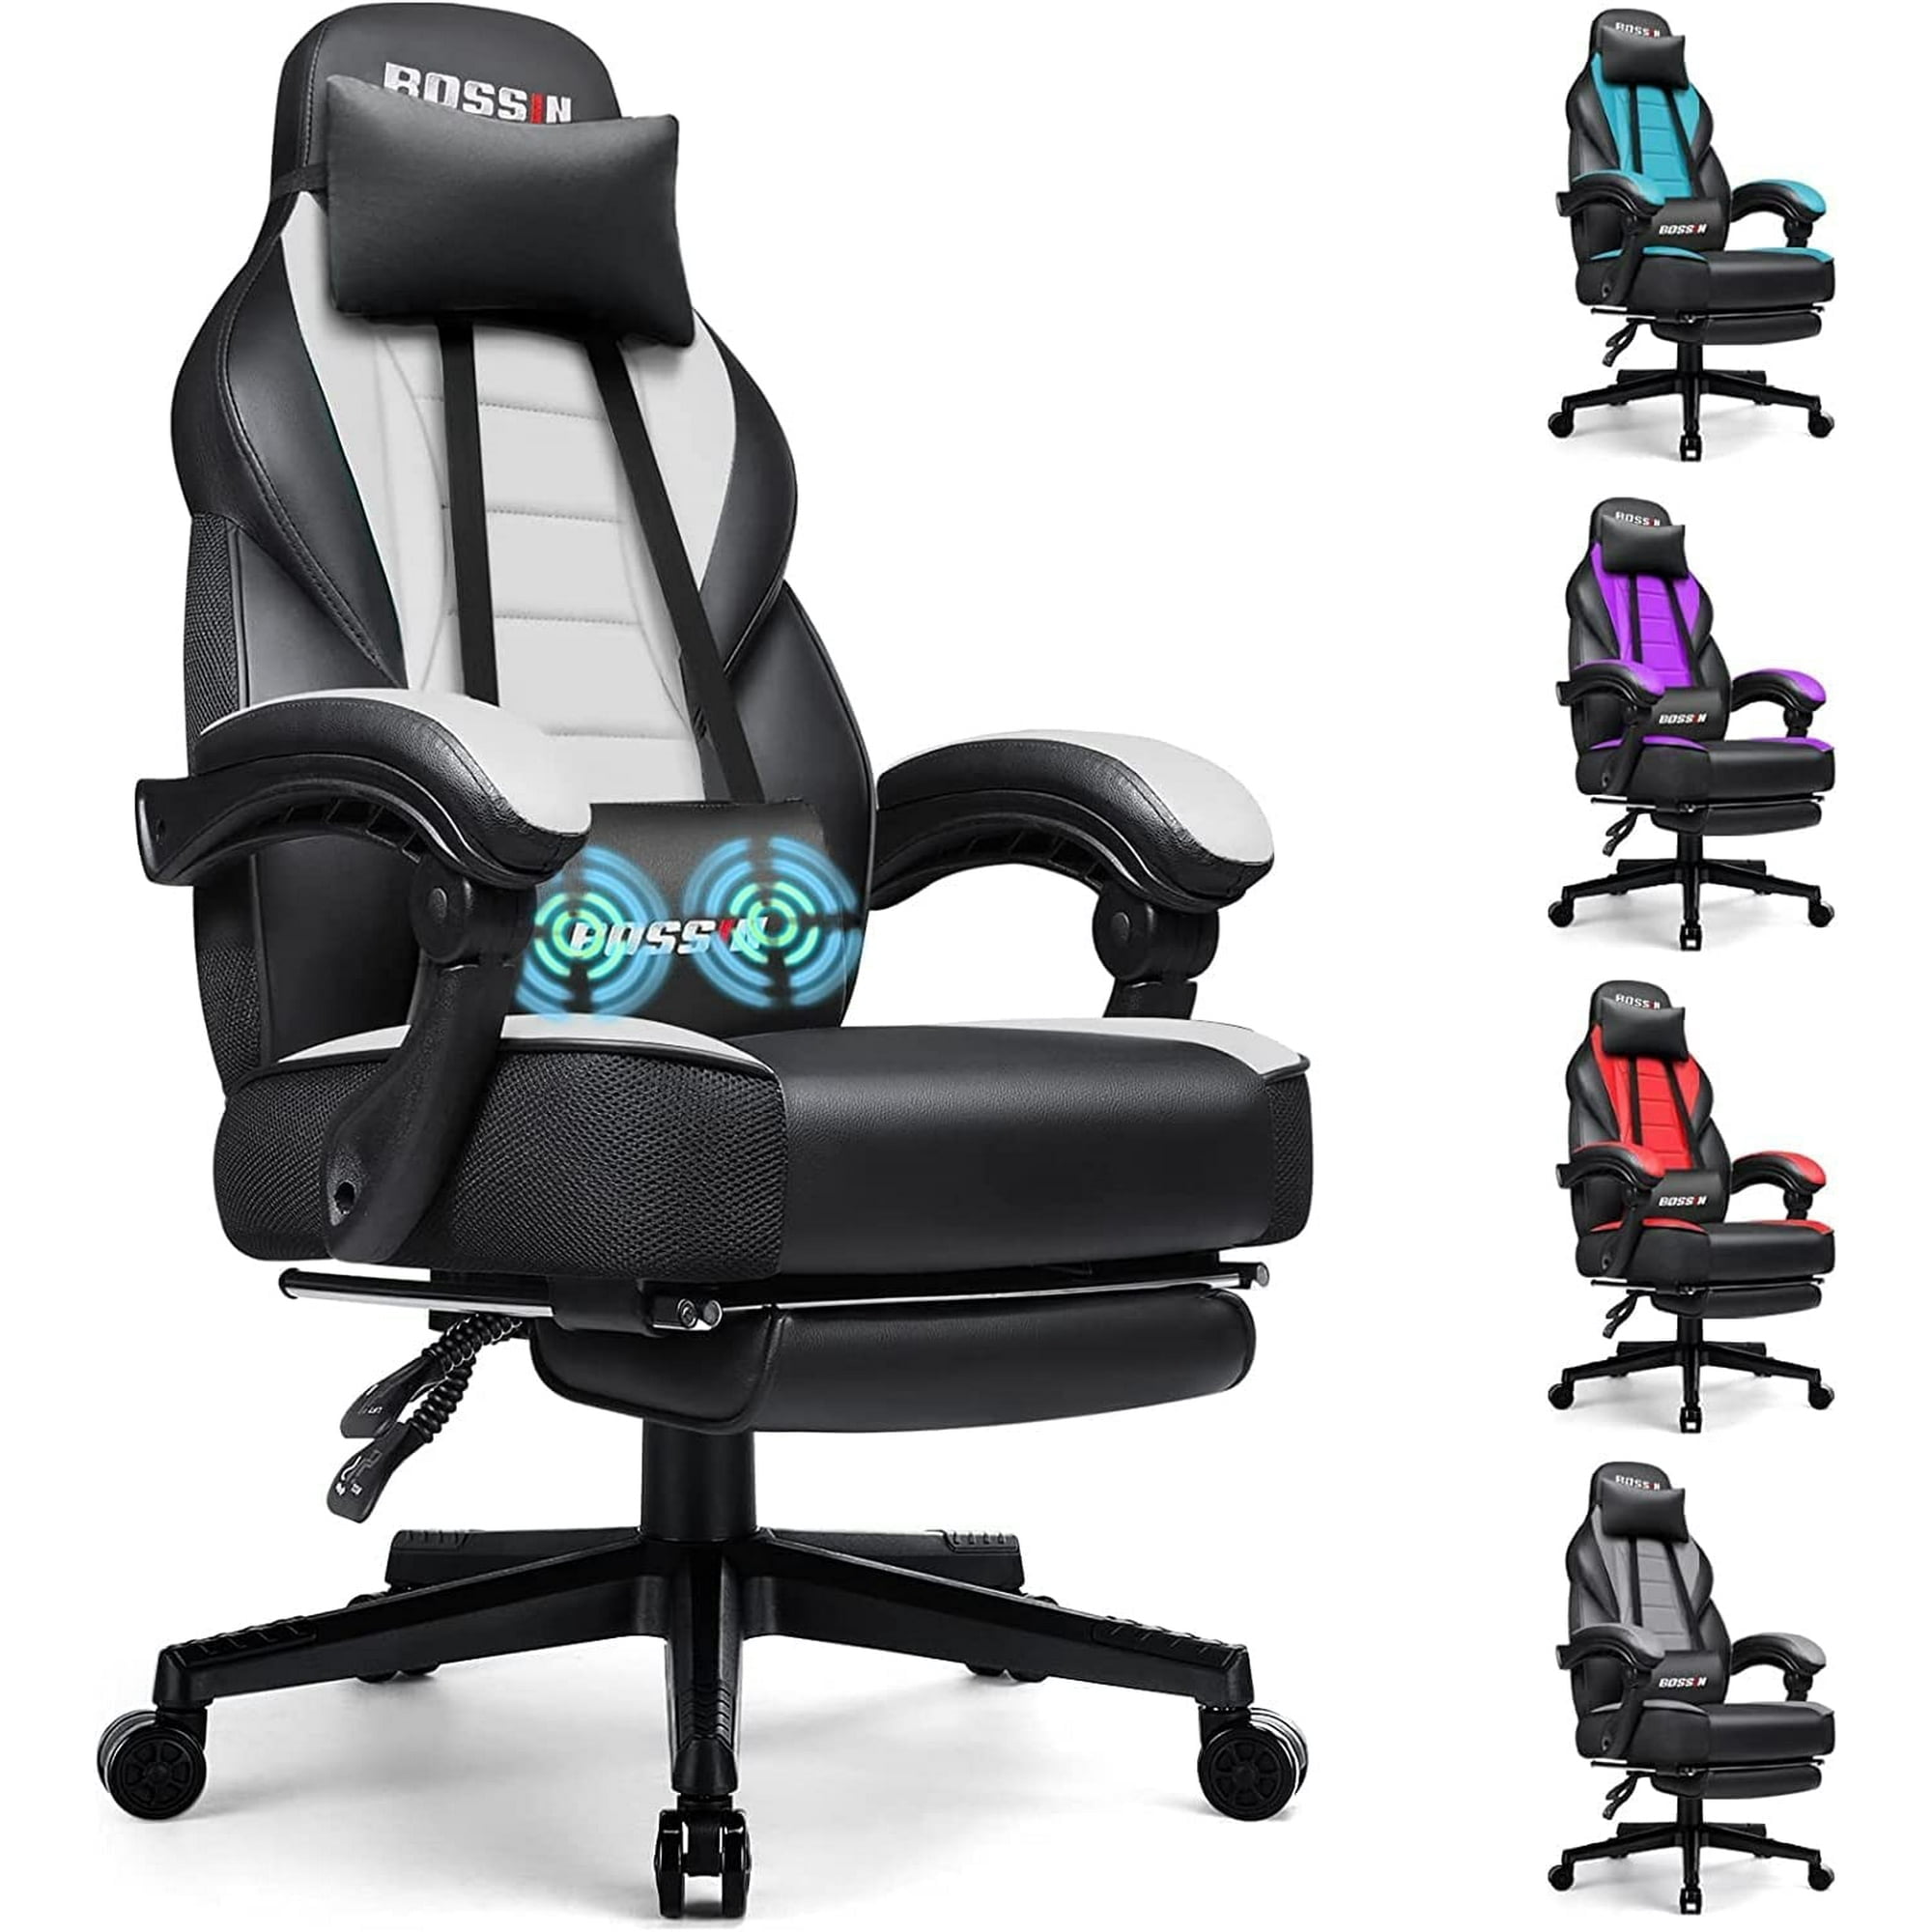 Waleaf Gaming Chair, Ergonomic Heavy Duty Design, Gamer Chair with